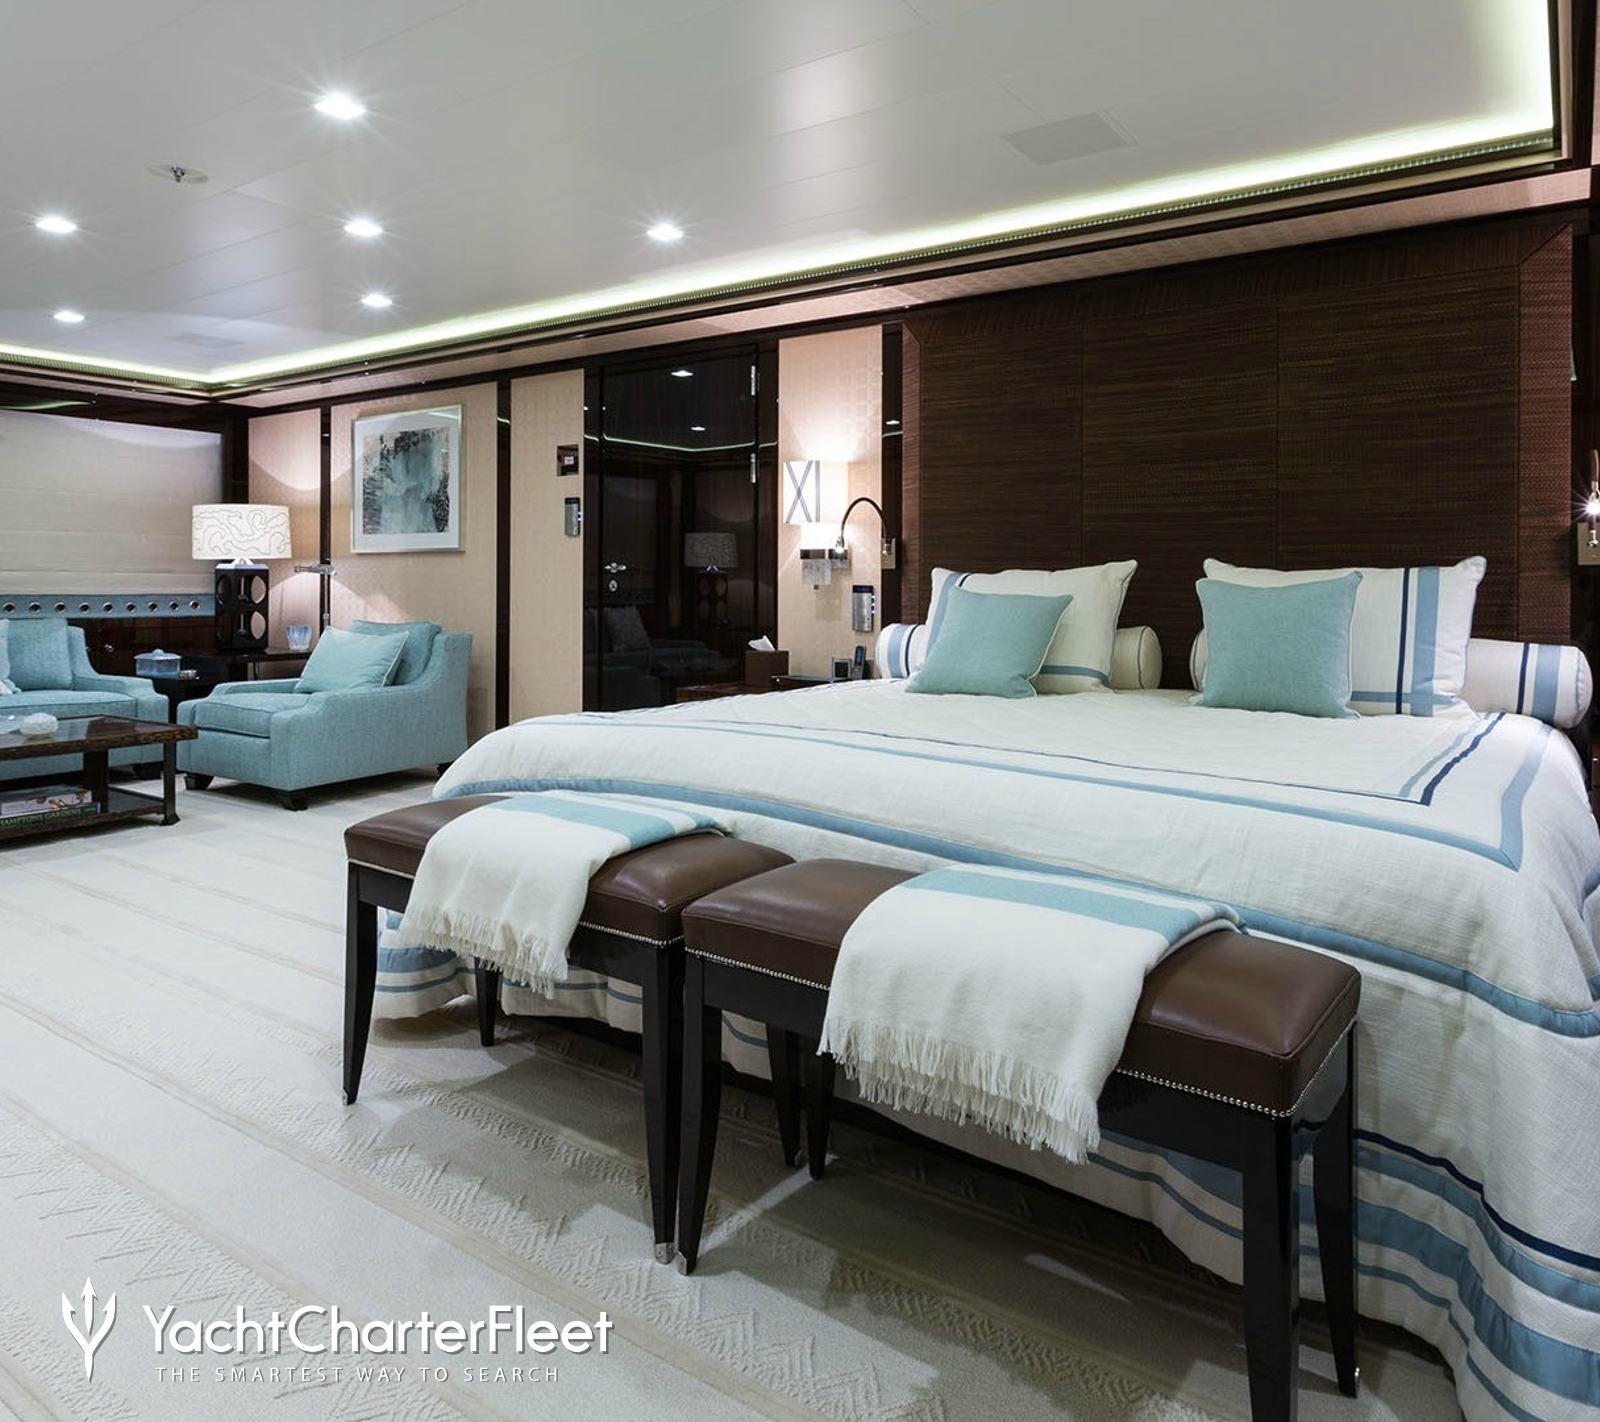 Motor yacht AXIOMA returns to Caribbean charter fleet following refit ...